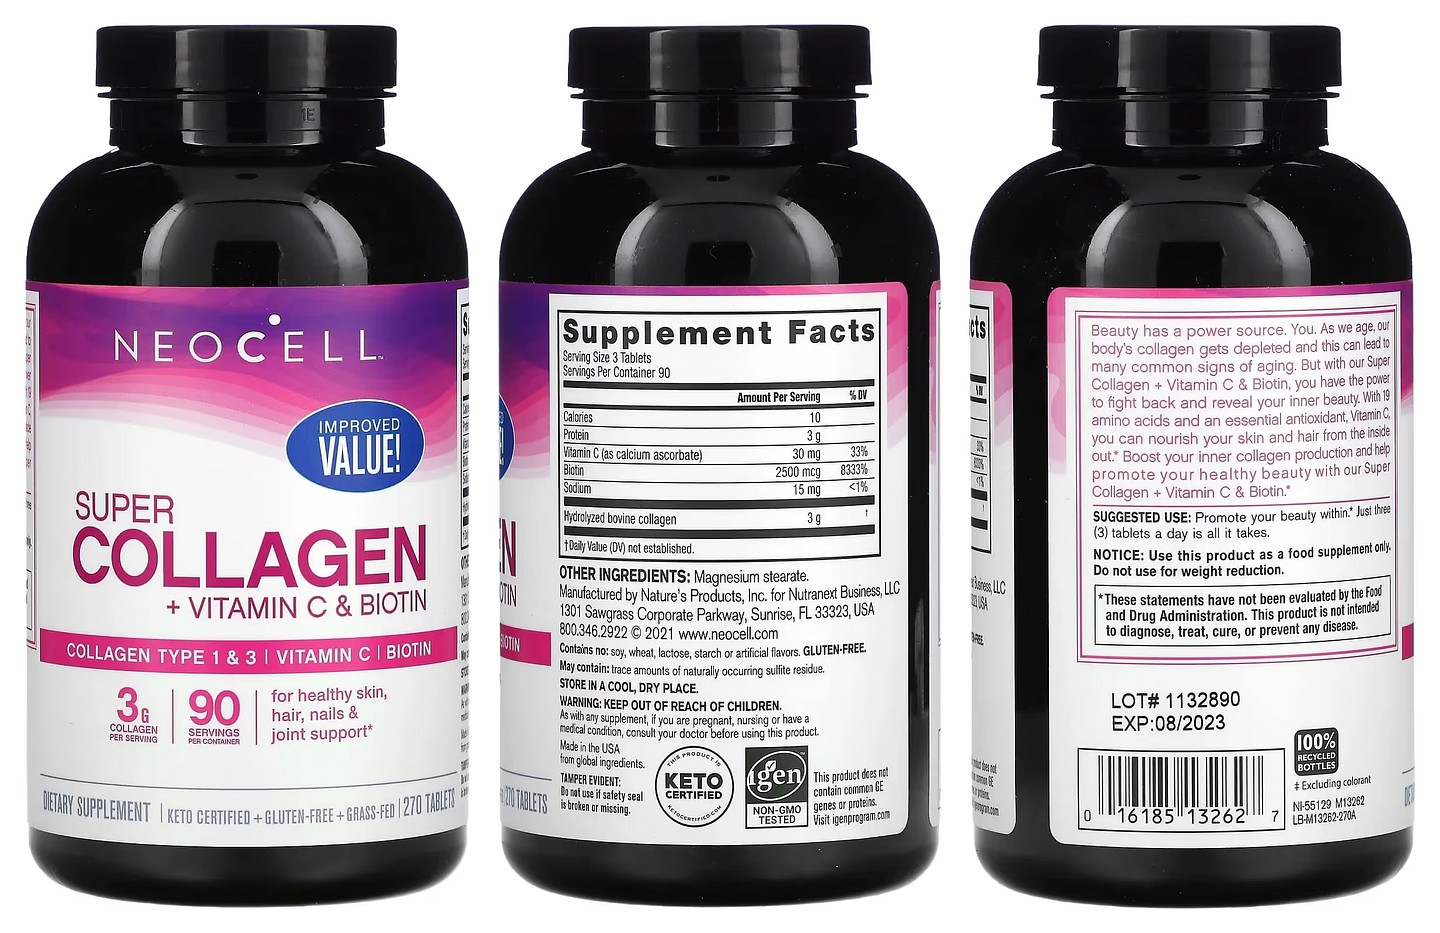 NeoCell, Super Collagen, + Vitamin C & Biotin packaging